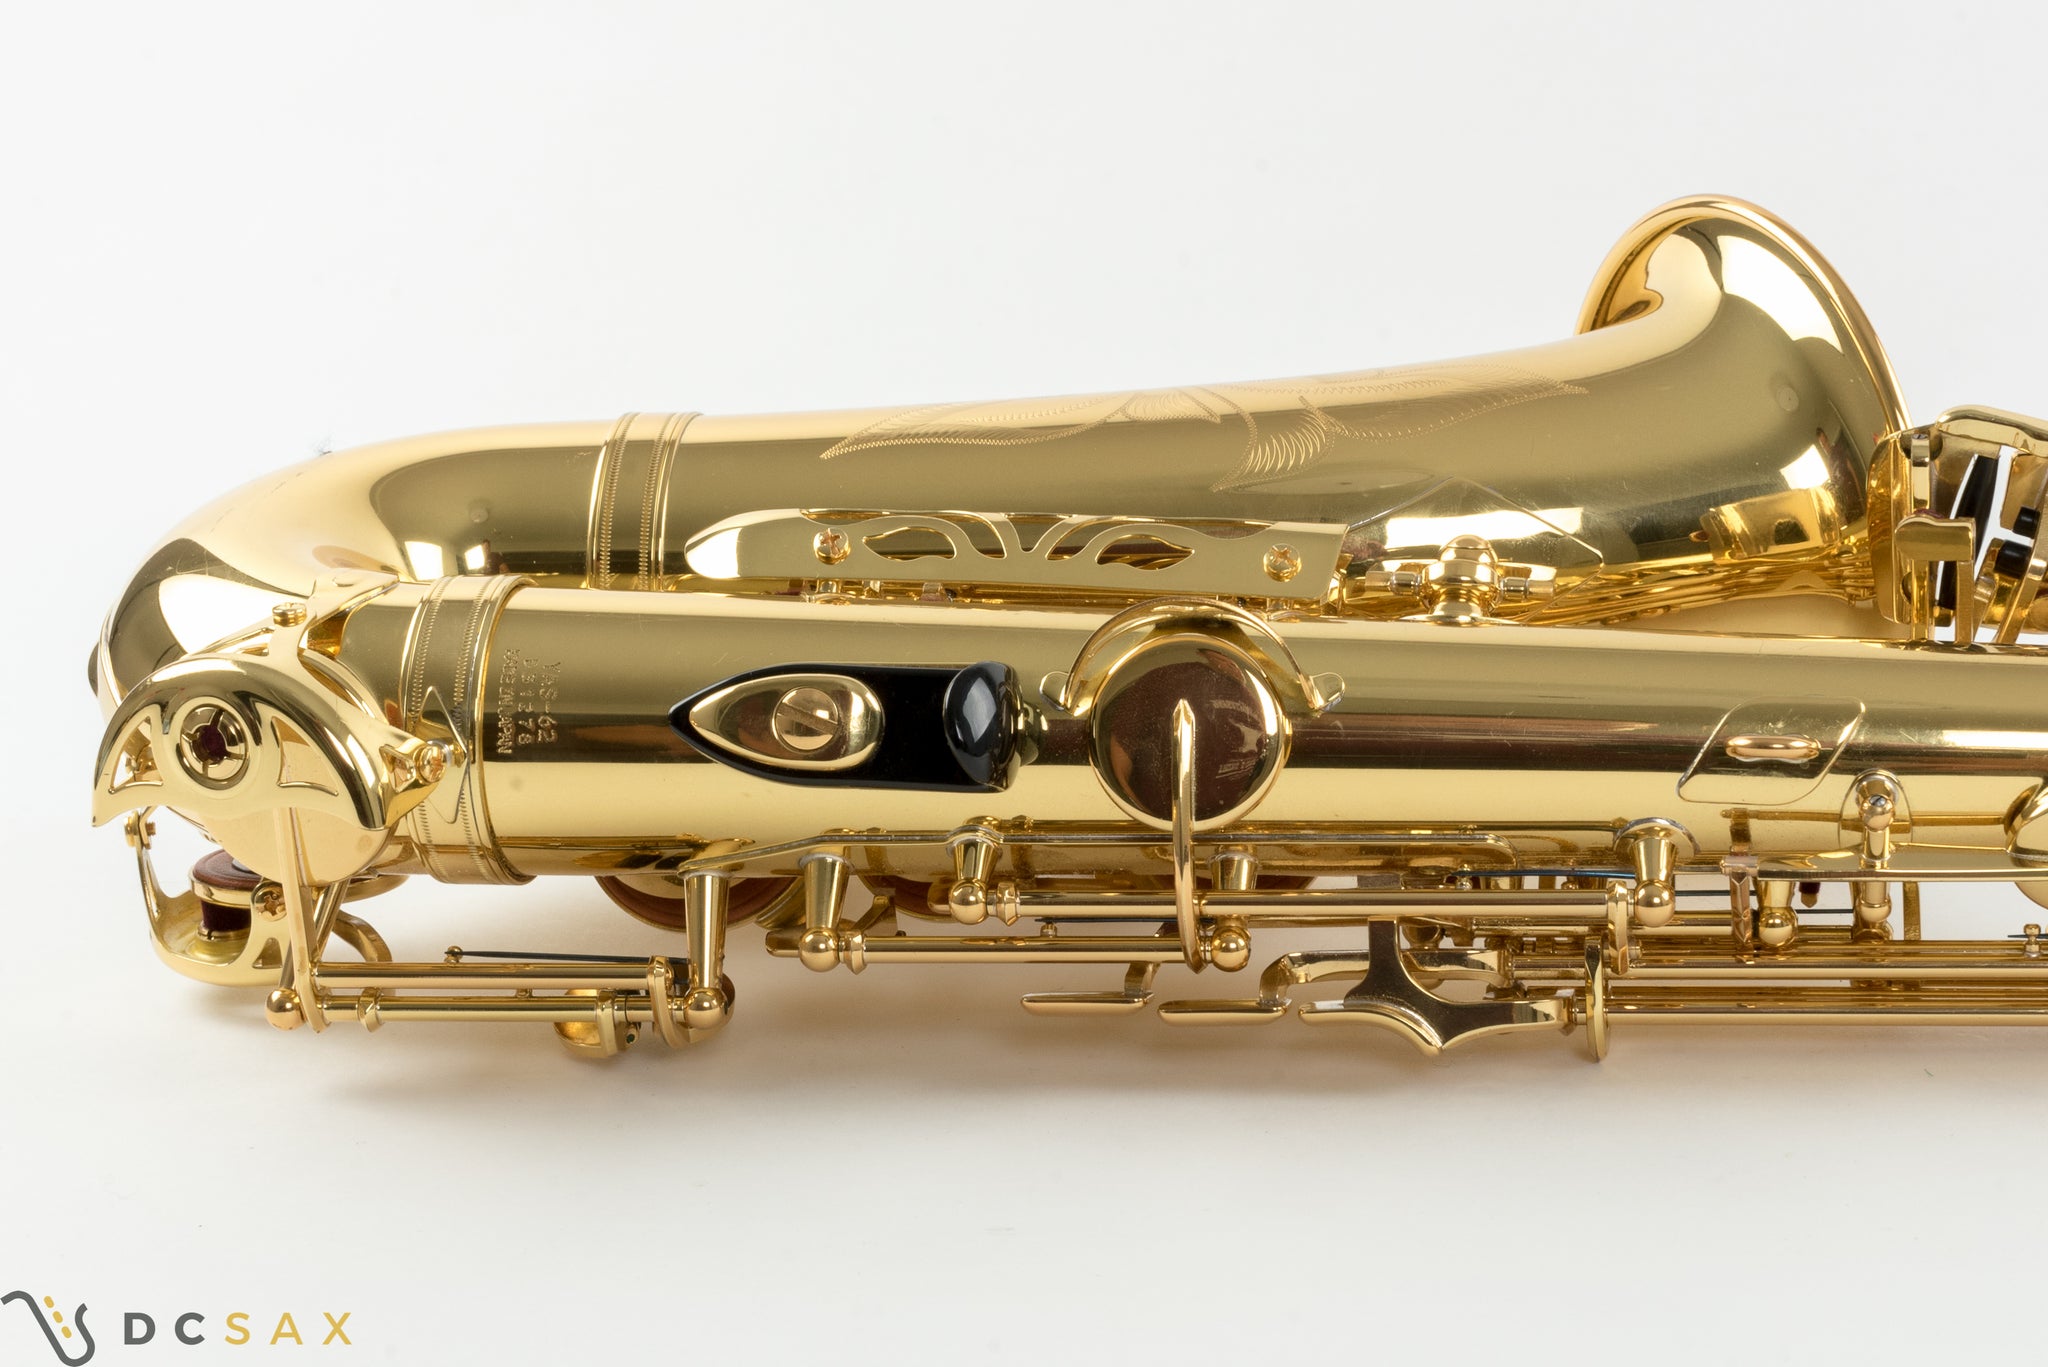 Yamaha YAS-62 Alto Saxophone, Near Mint